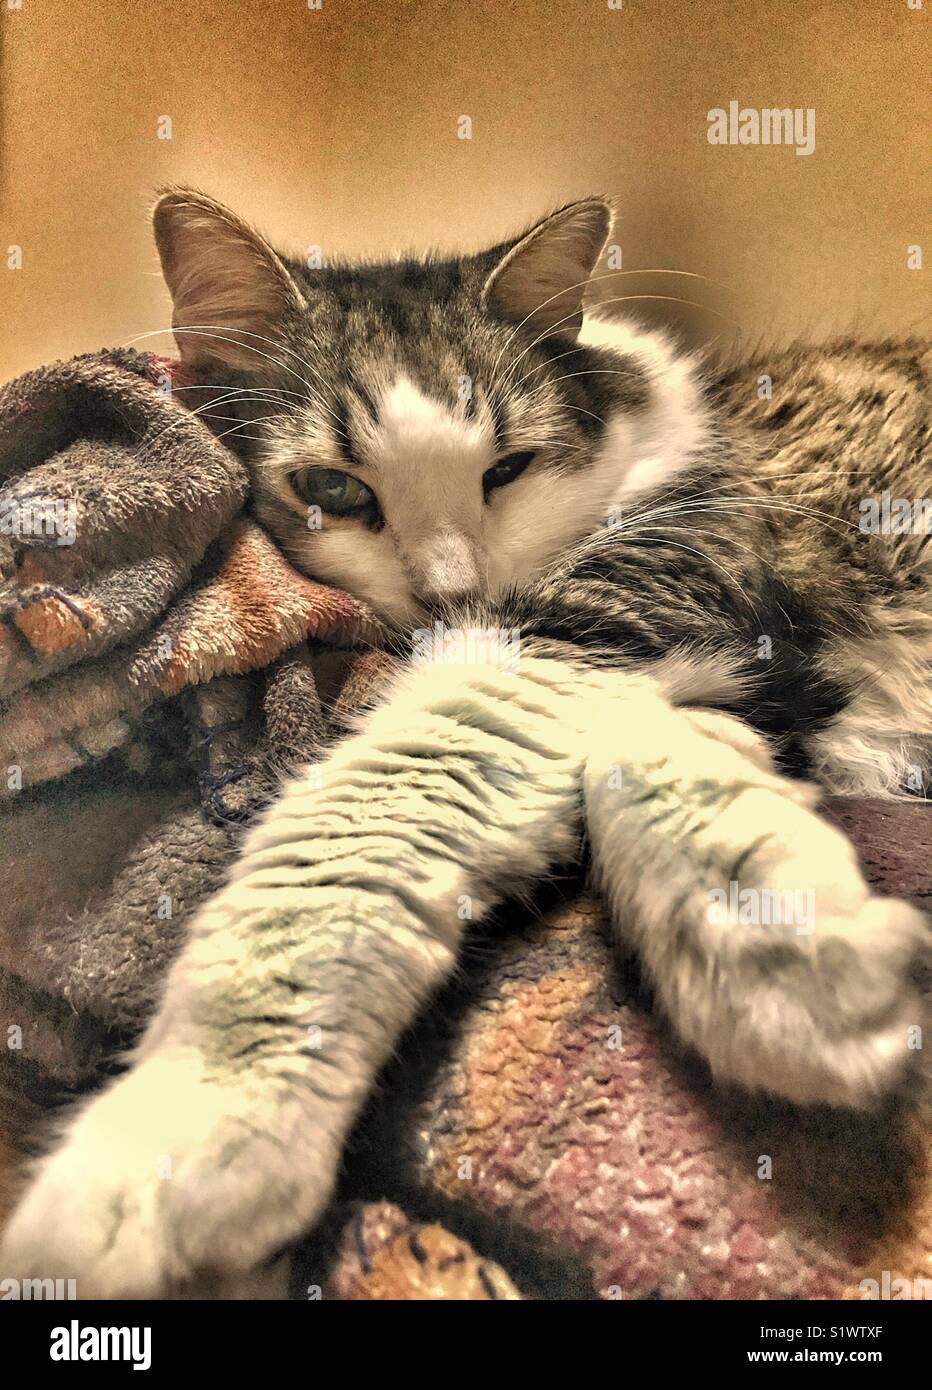 Cat nap interrupted Stock Photo